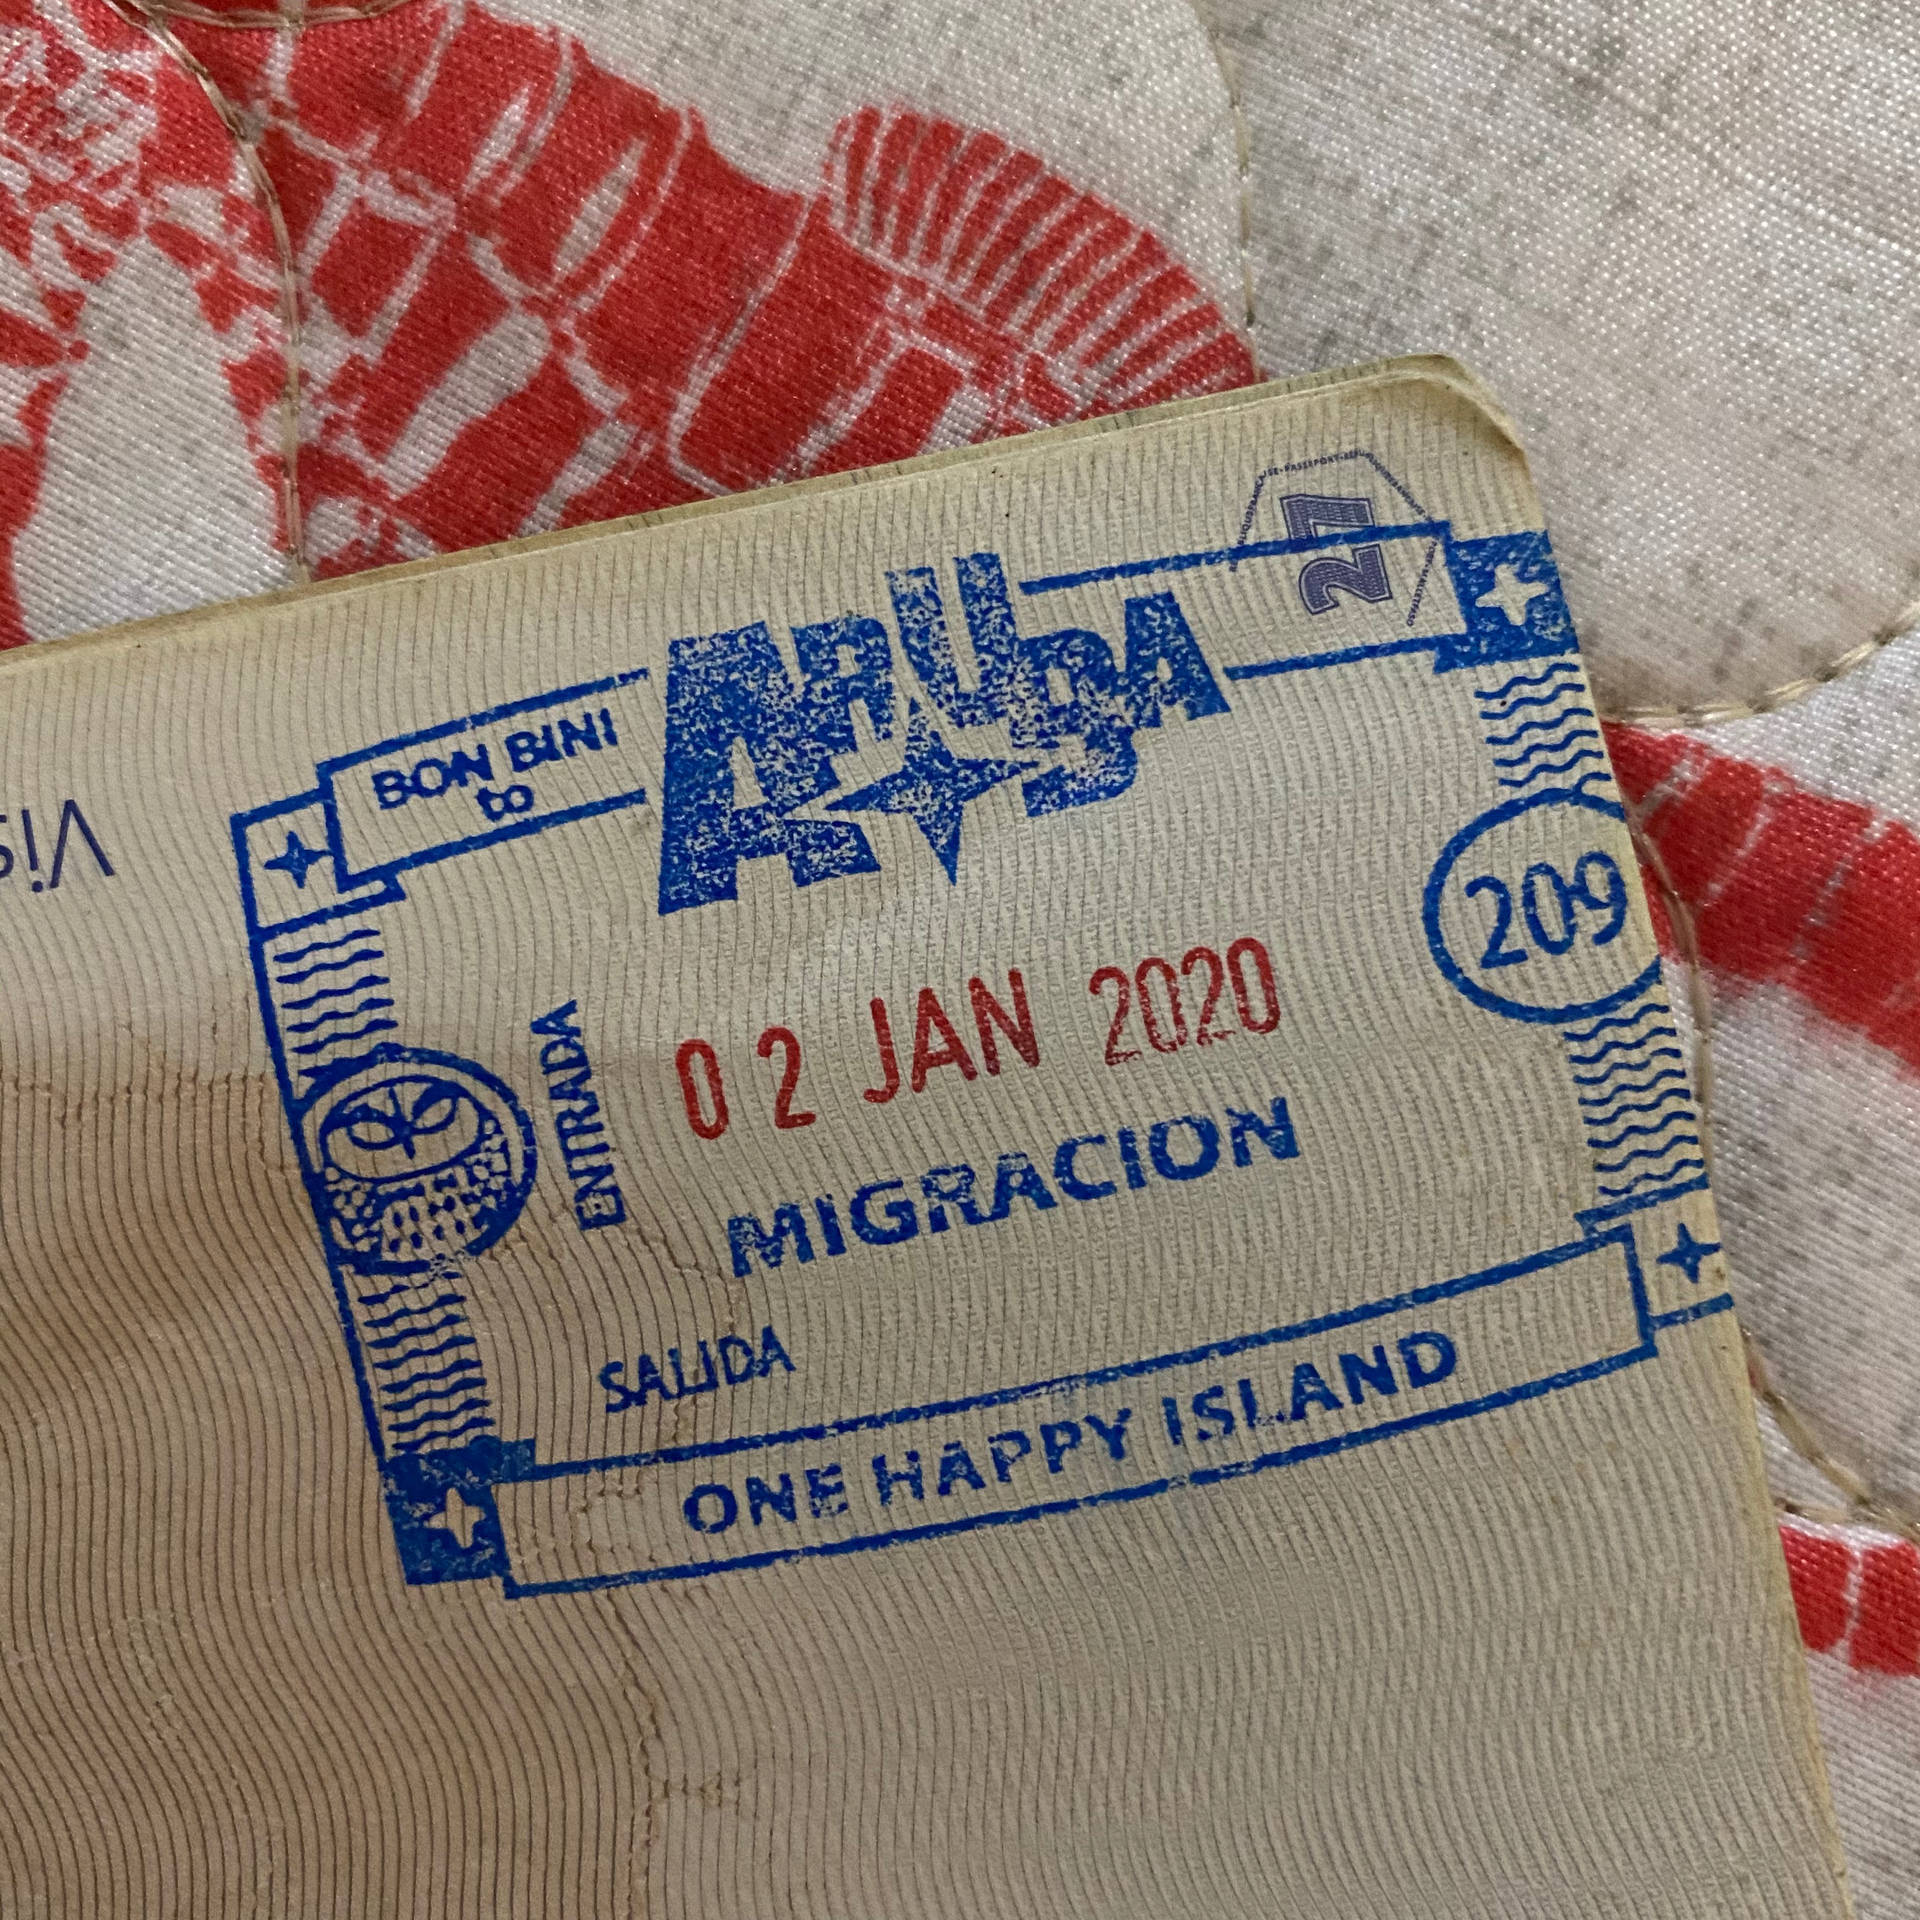 Aruba Passport Stamp Background